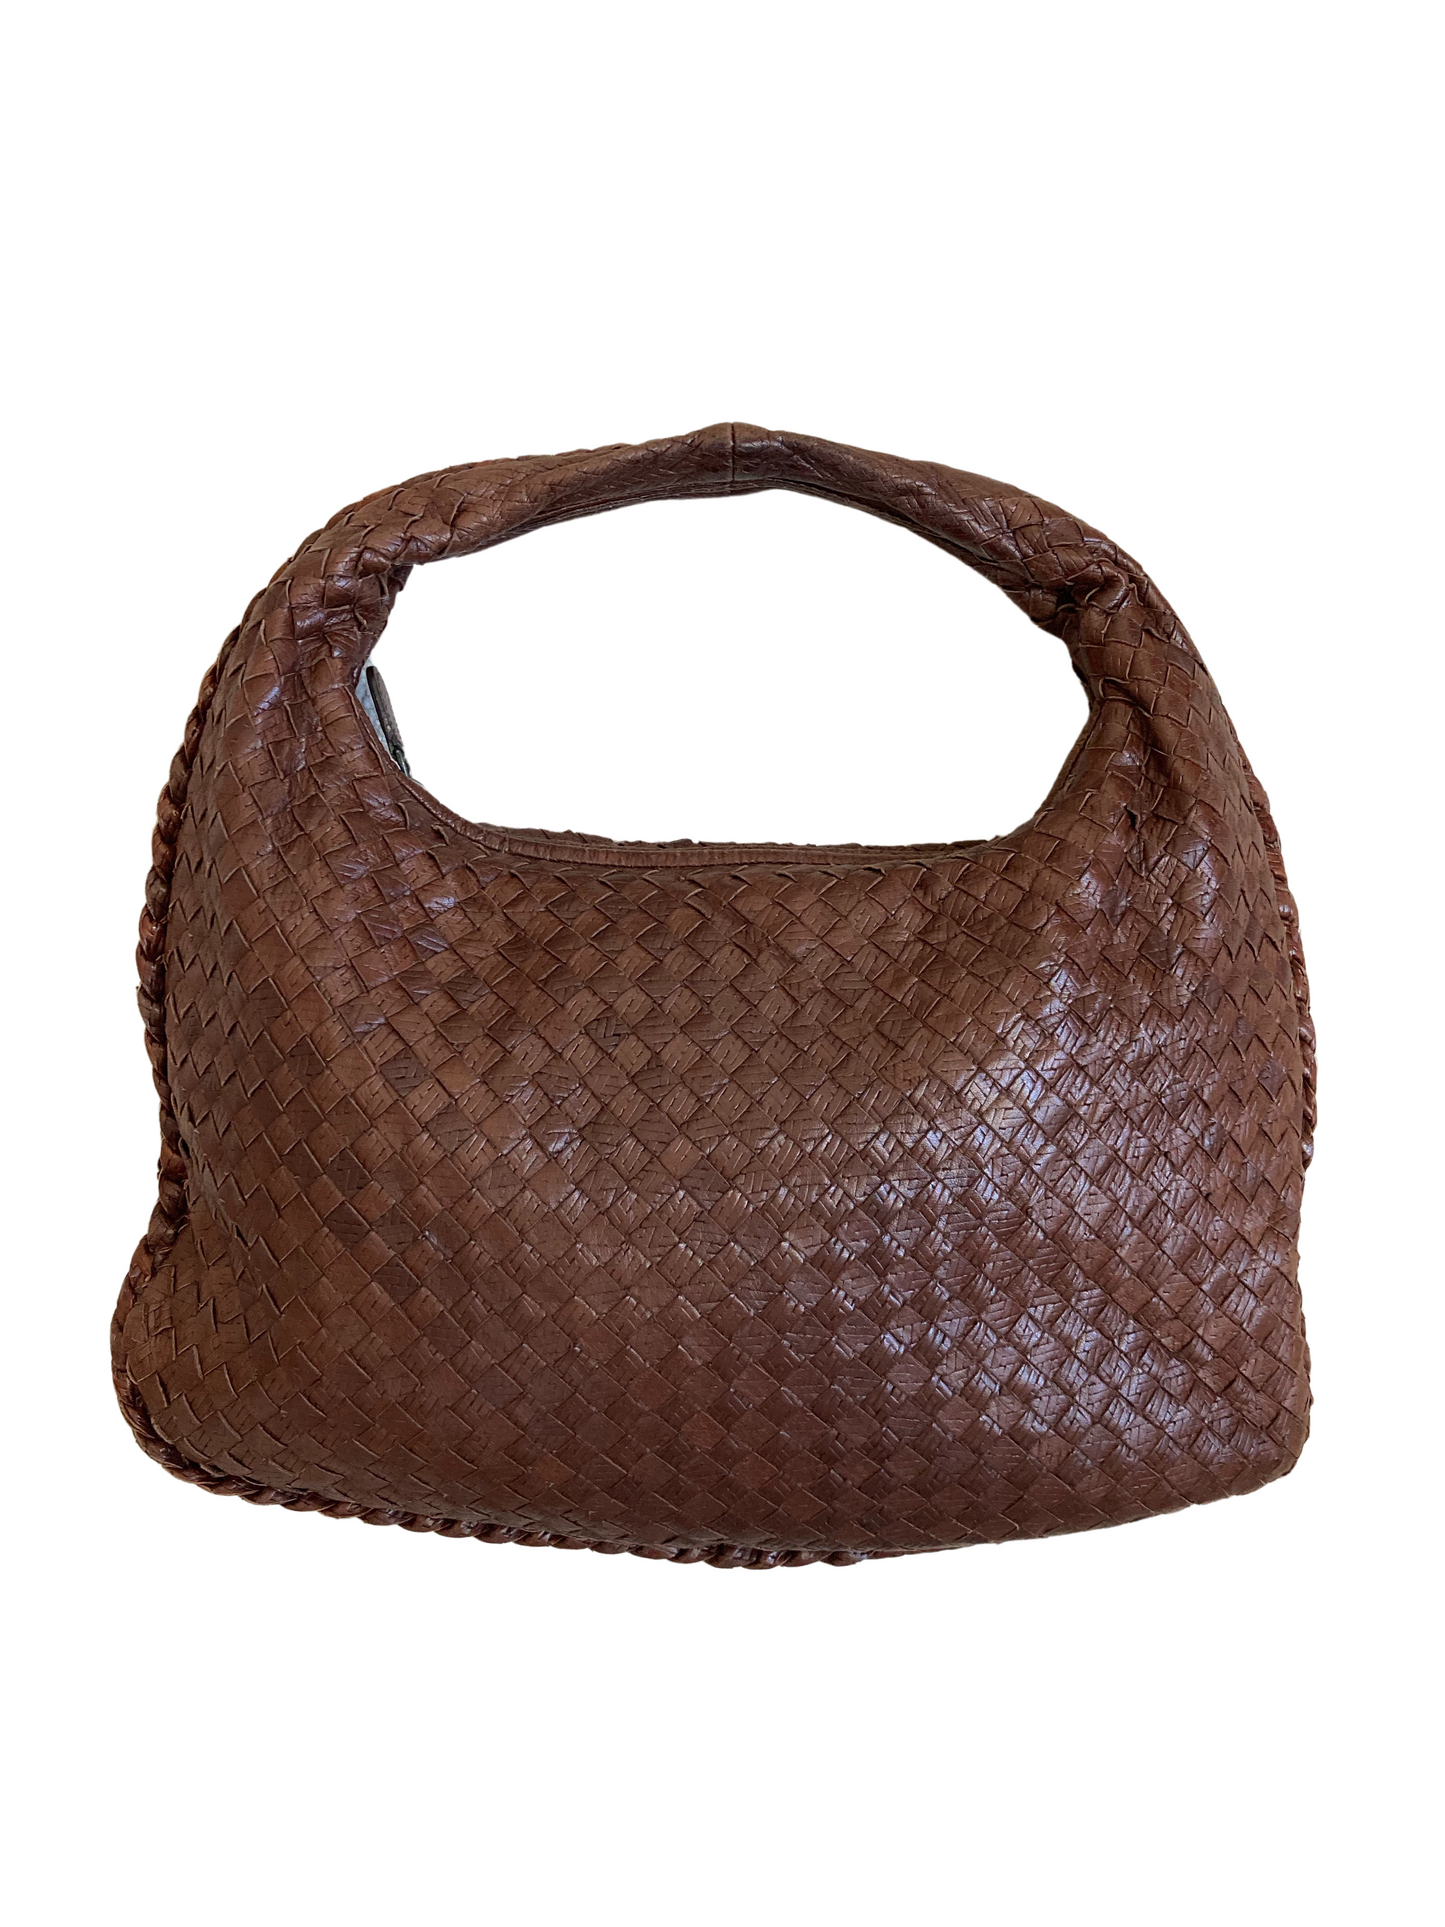 Bottega Veneta Brown Leather Medium Hobo Bag